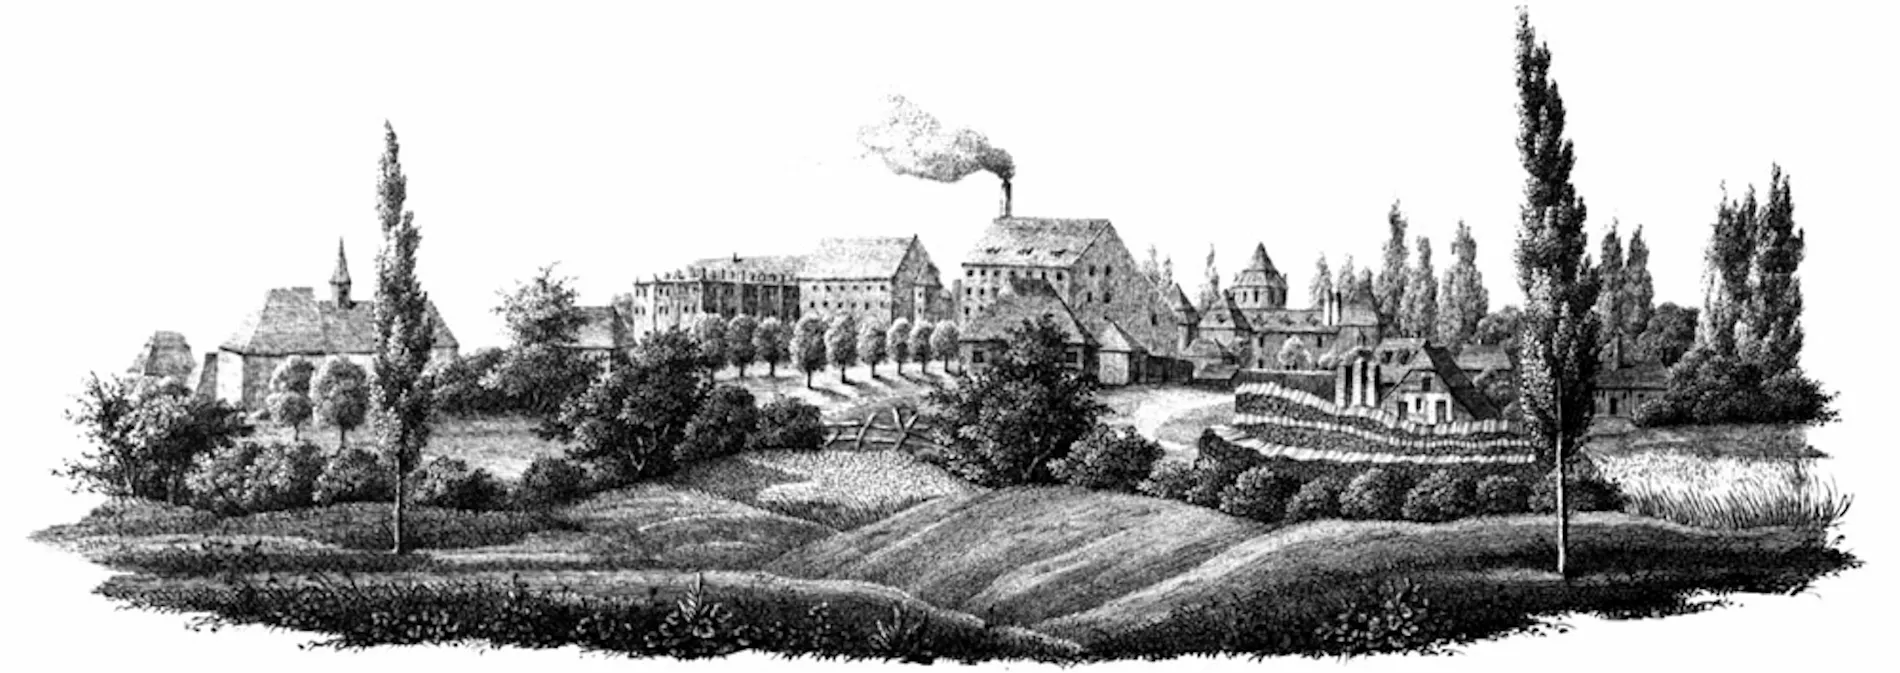 Waghäusel Sugar factory in 1837.